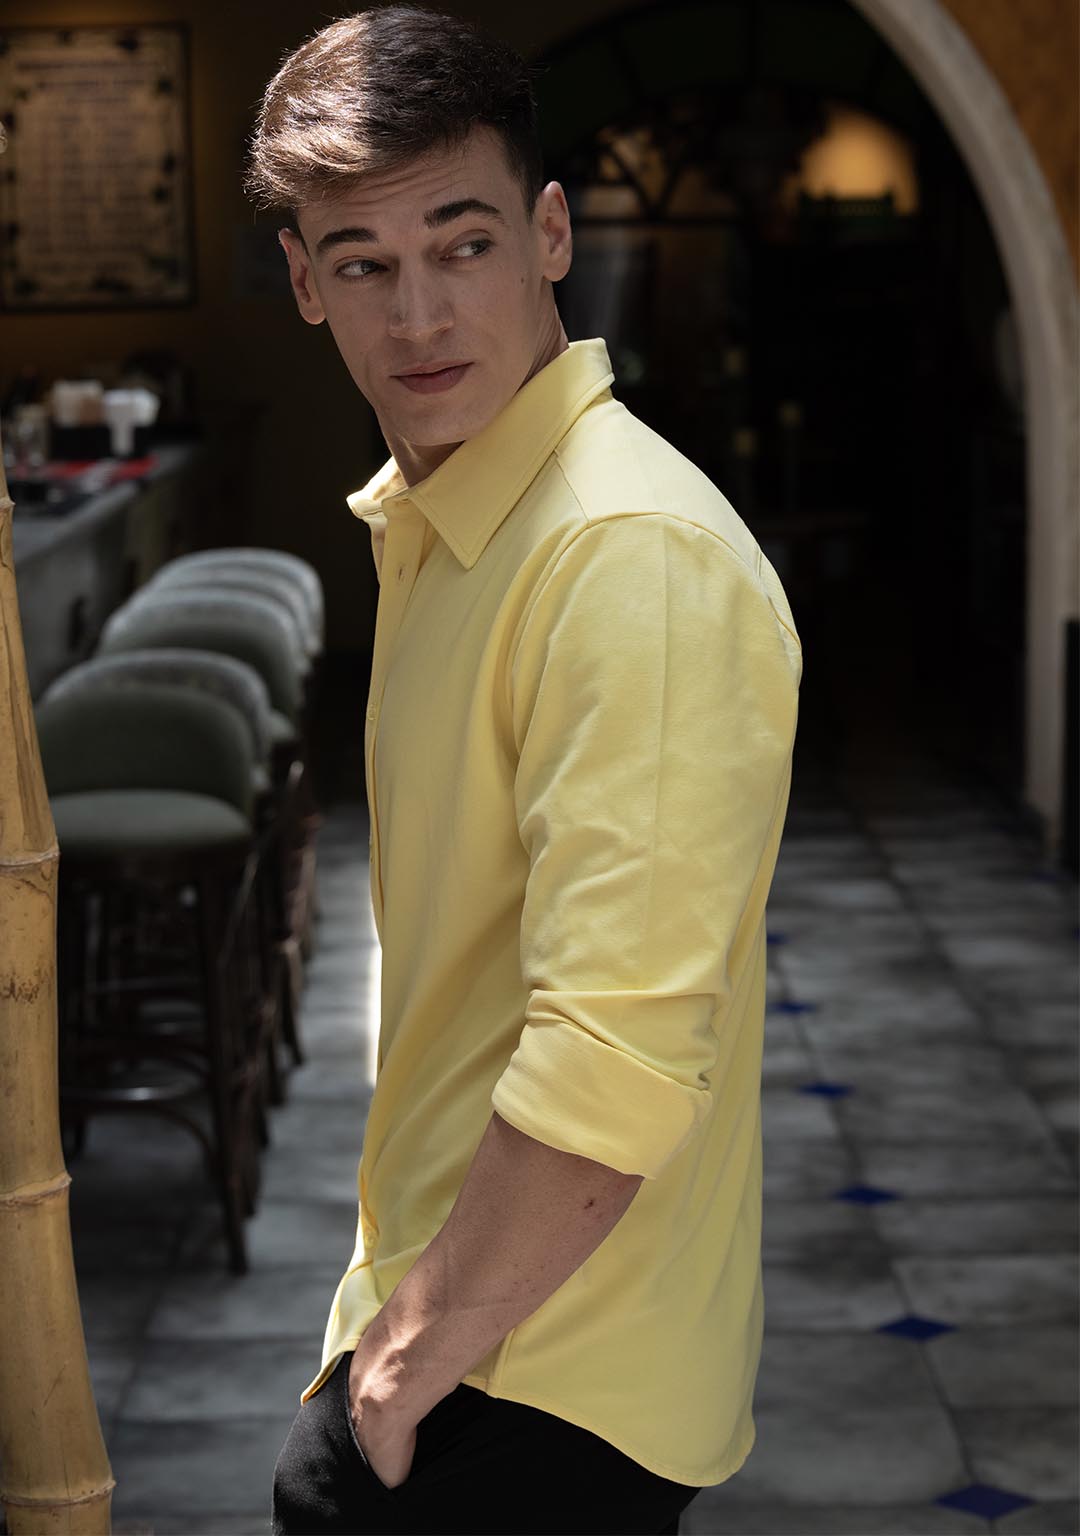 Piqué Shirt in Pastel Yellow